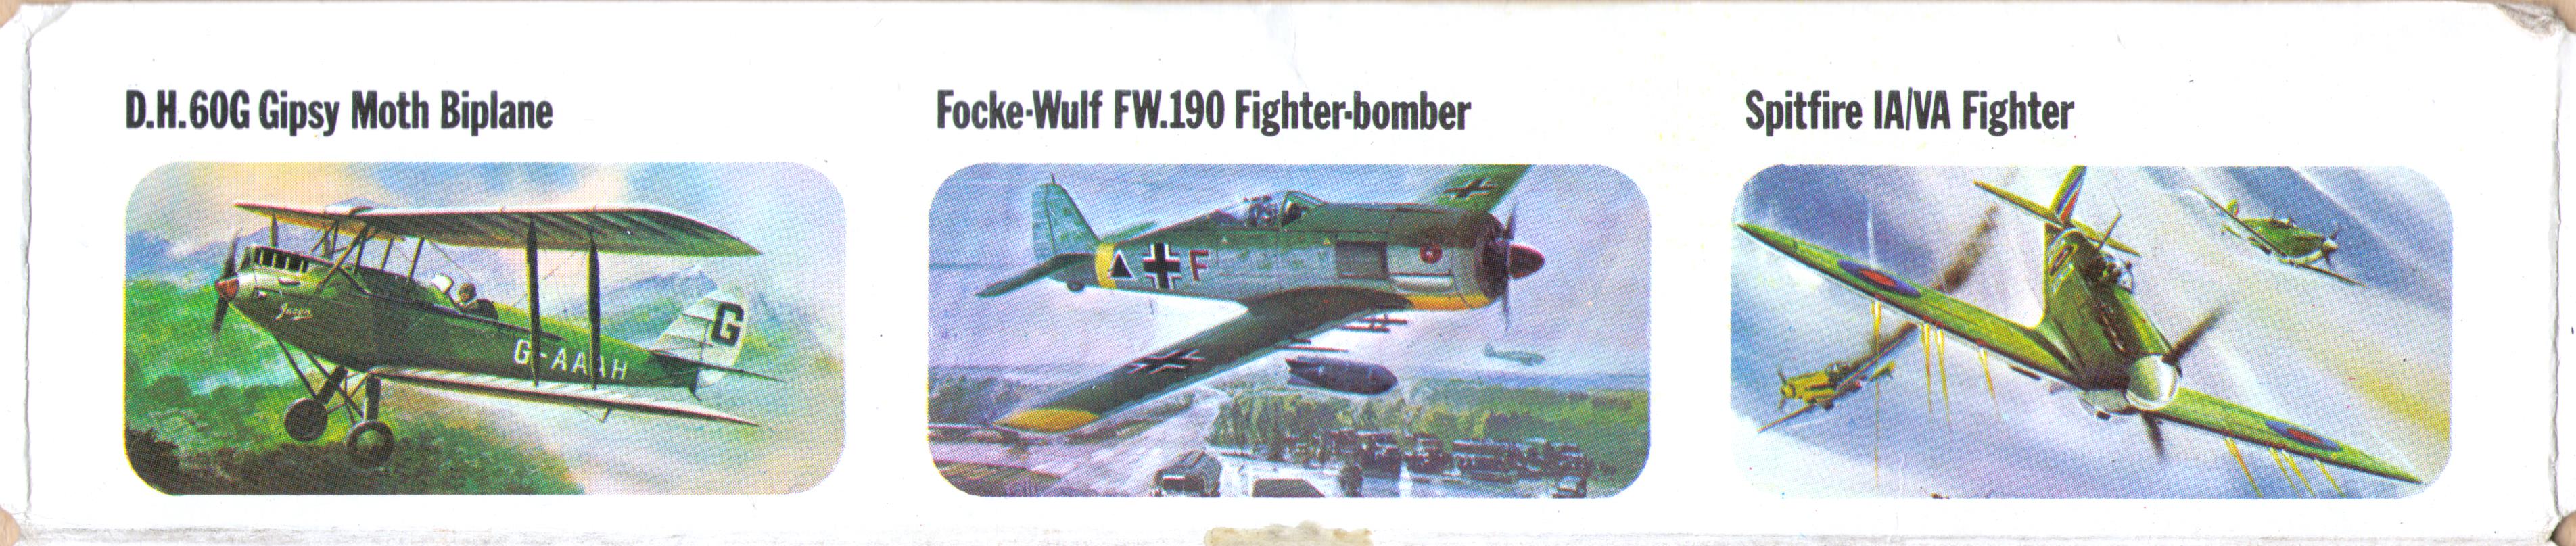 Другие модели Синей серии (сторона нижней части коробки) FROG F391 Curtiss P-40E Warhawk (Kittyhawk IA) Fighter bomber, Blue series, Rovex Hobbies & Models, 1974-75